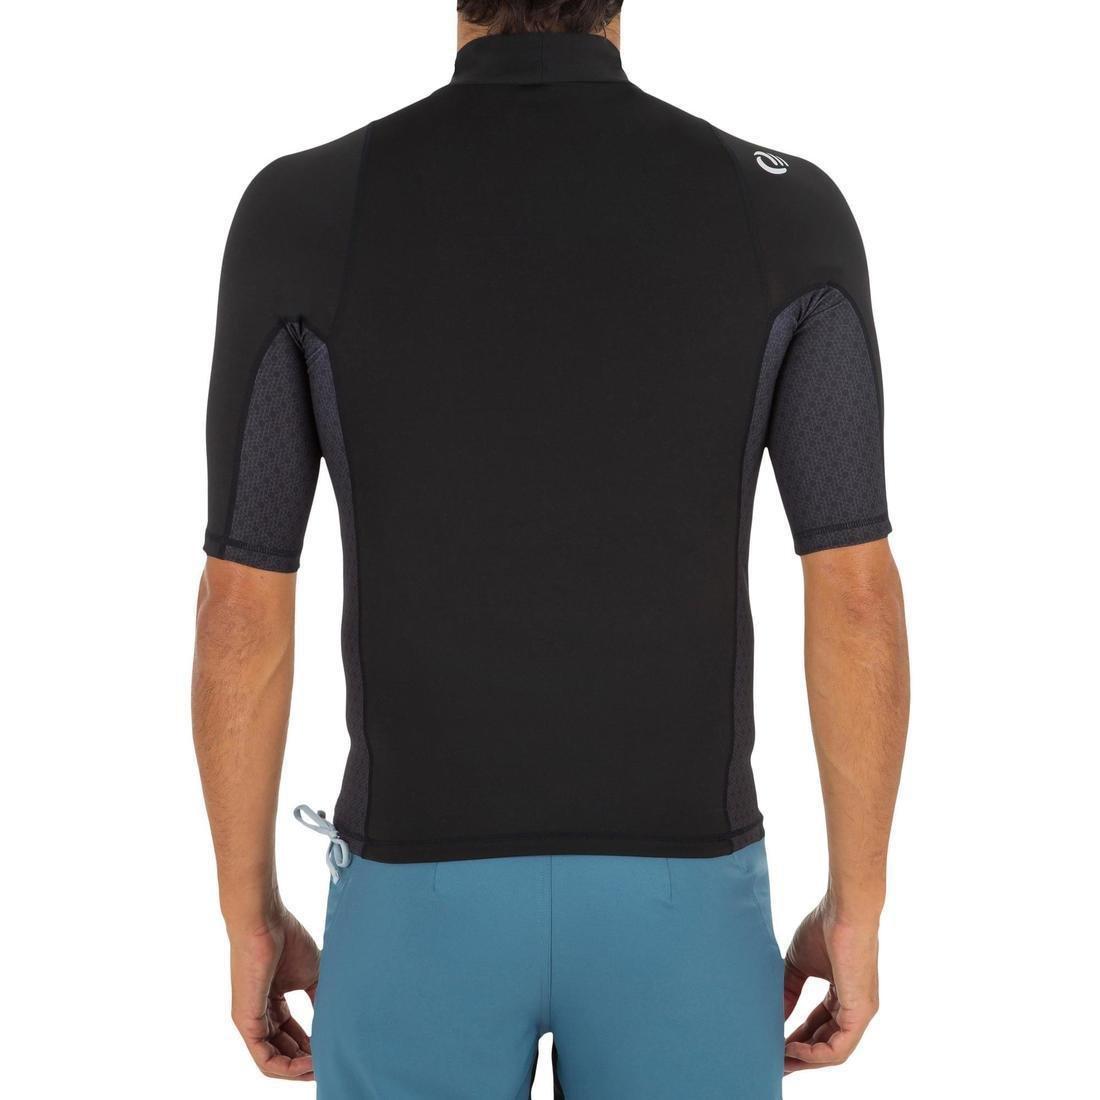 OLAIAN - Mens 500 Short-Sleeved Uv-Protection Surfing T-Shirt, Black